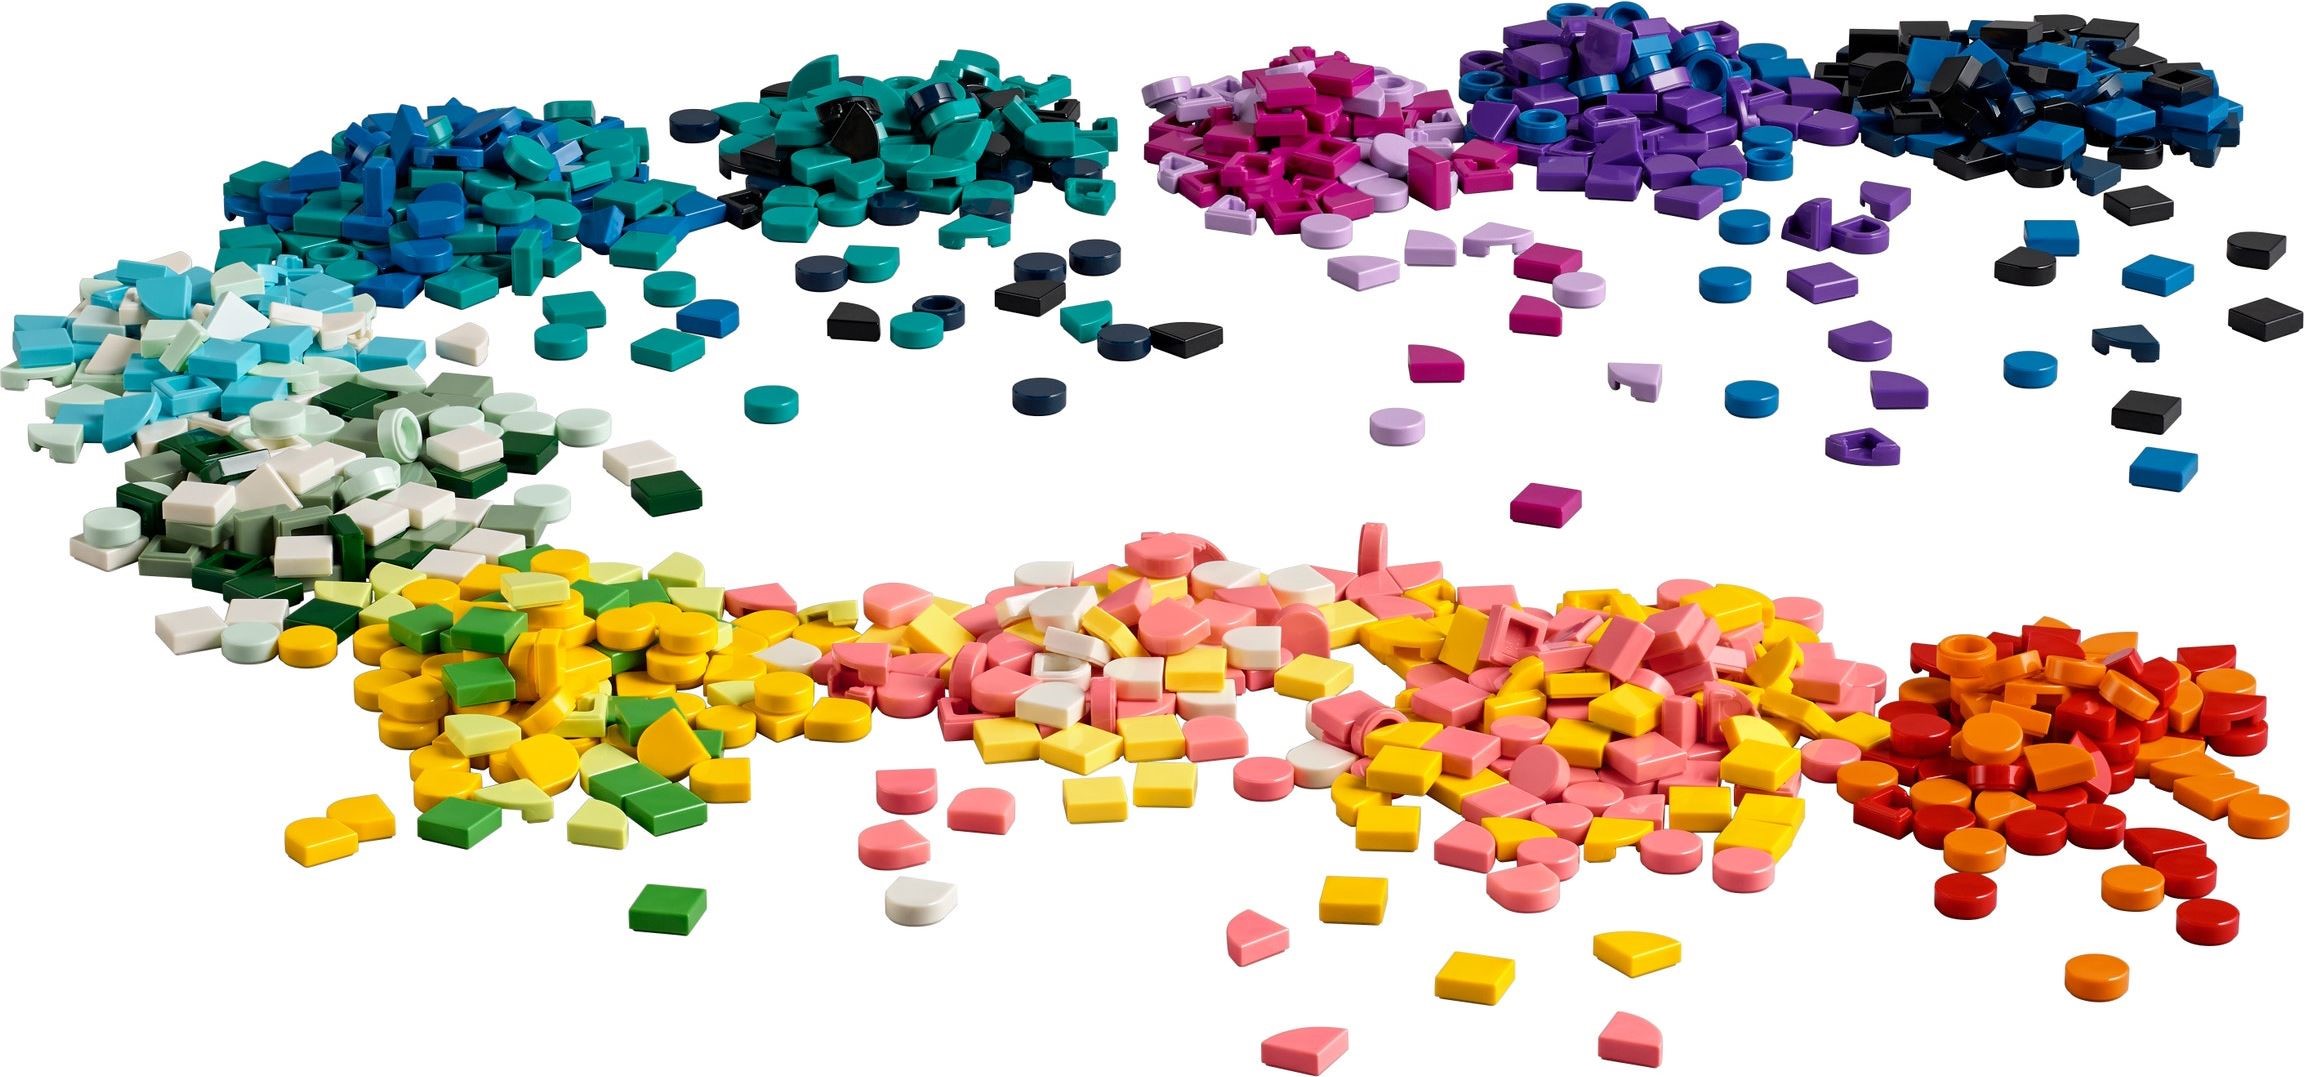 1x1 Alphabet Letter & Number Bricks Total 91 Pieces 100% for lego 